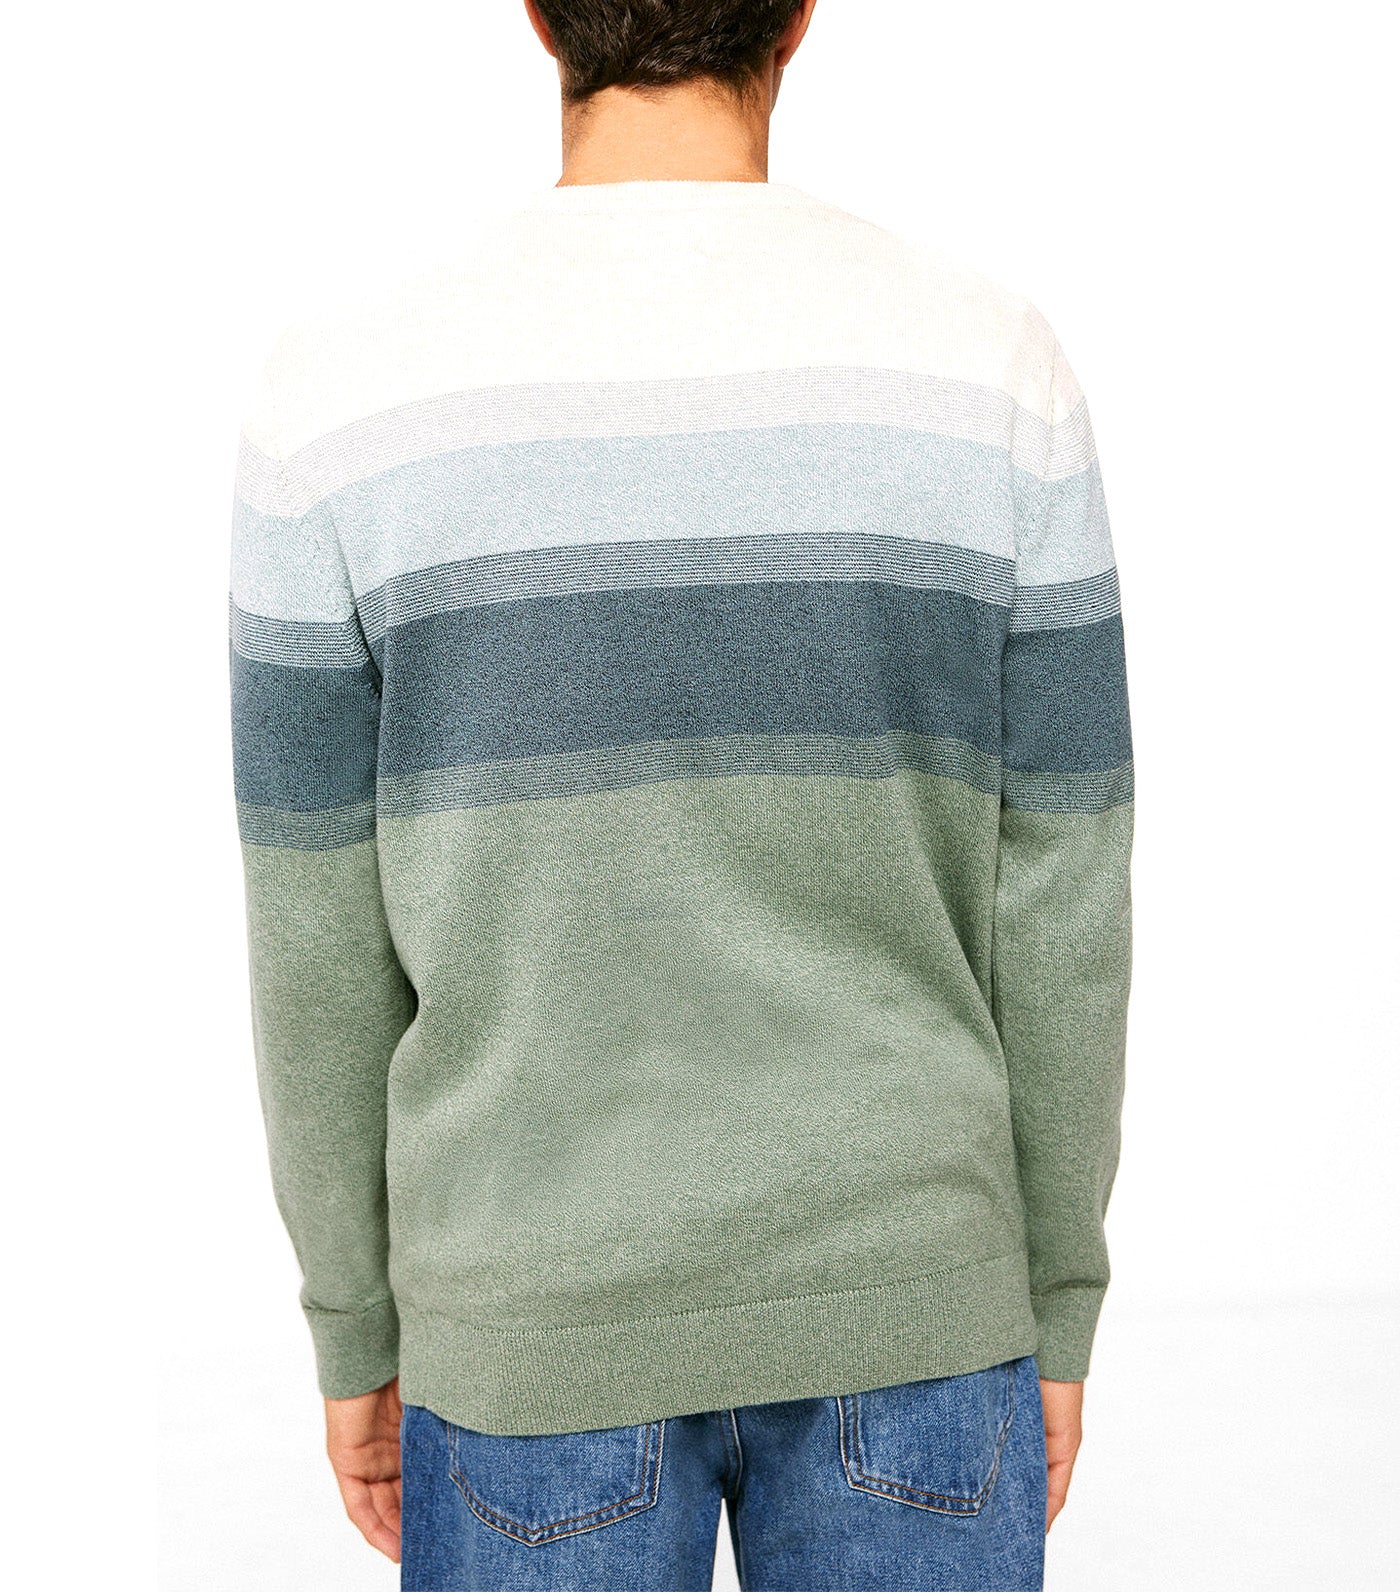 Positional Striped Fantasy Sweater Multi